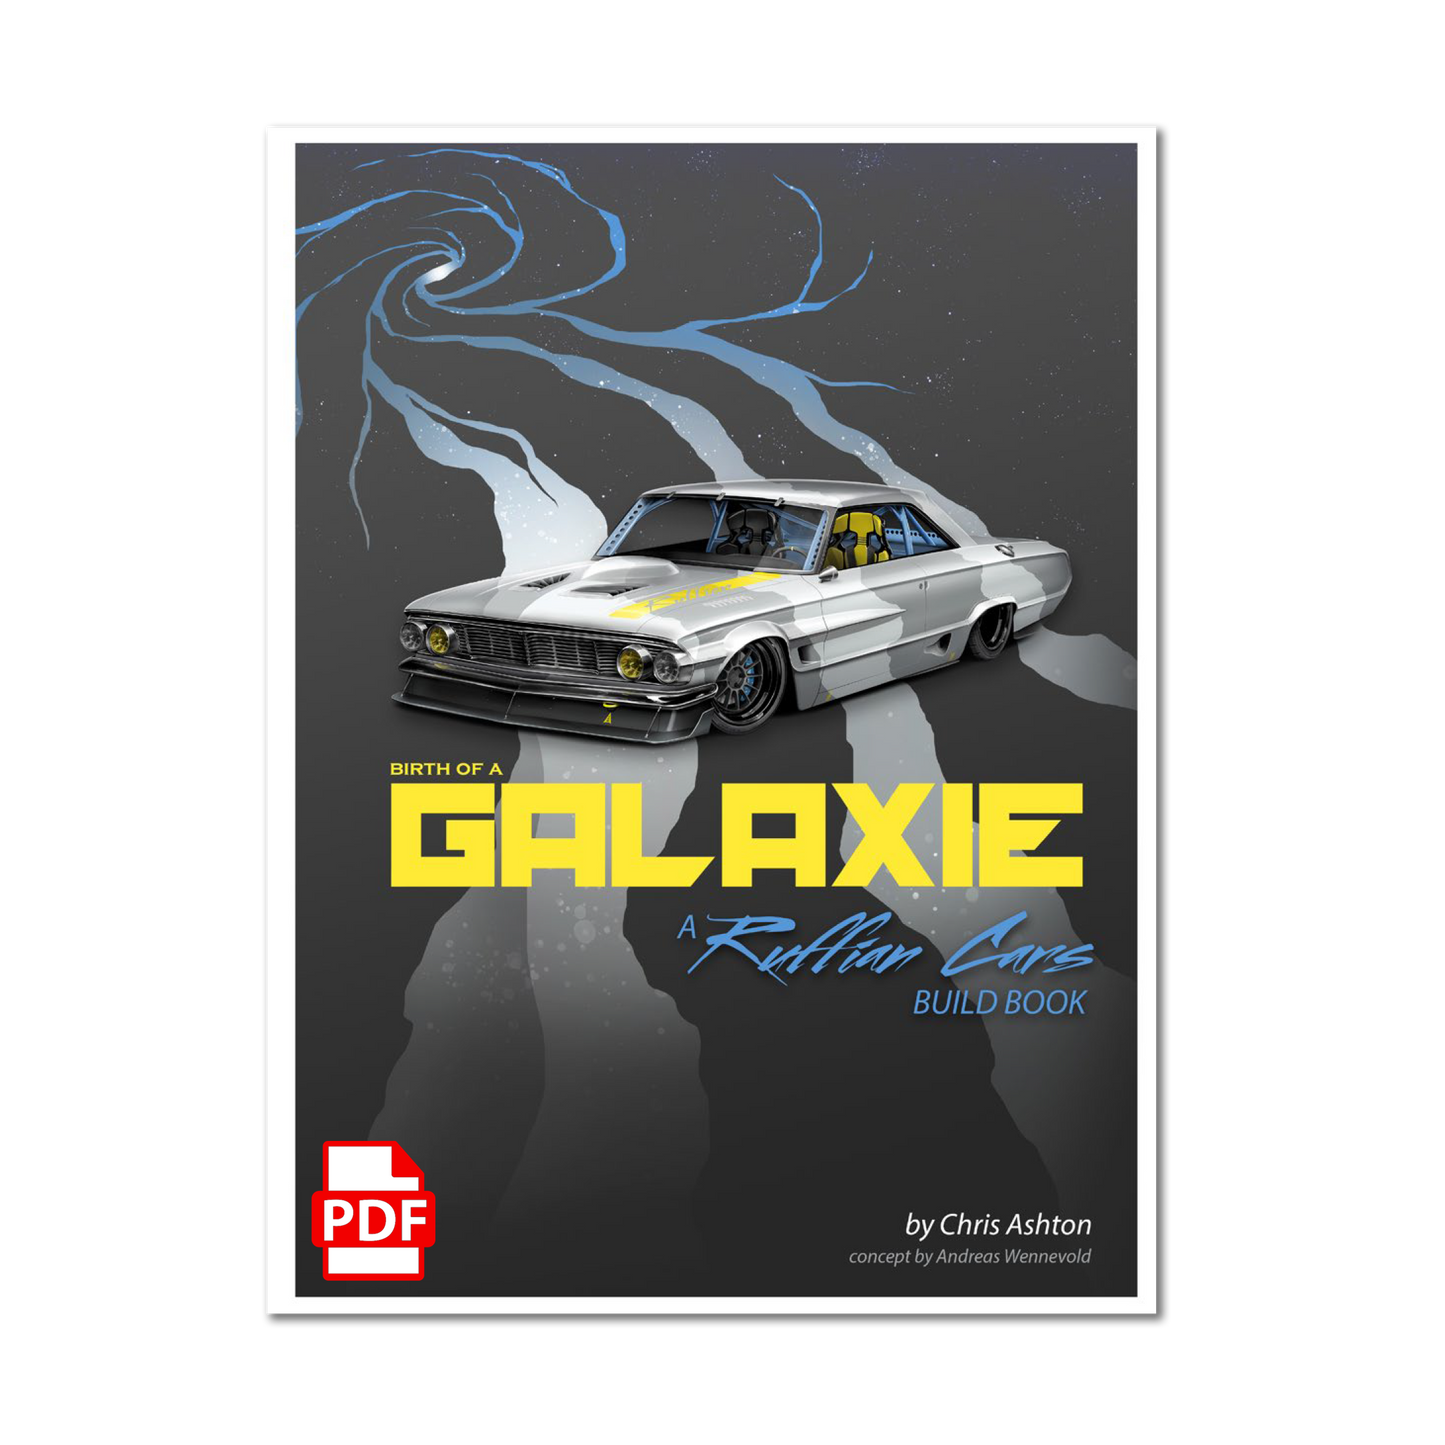 "BIRTH OF A GALAXIE" A Ruffian Cars Build Book (PDF Only)